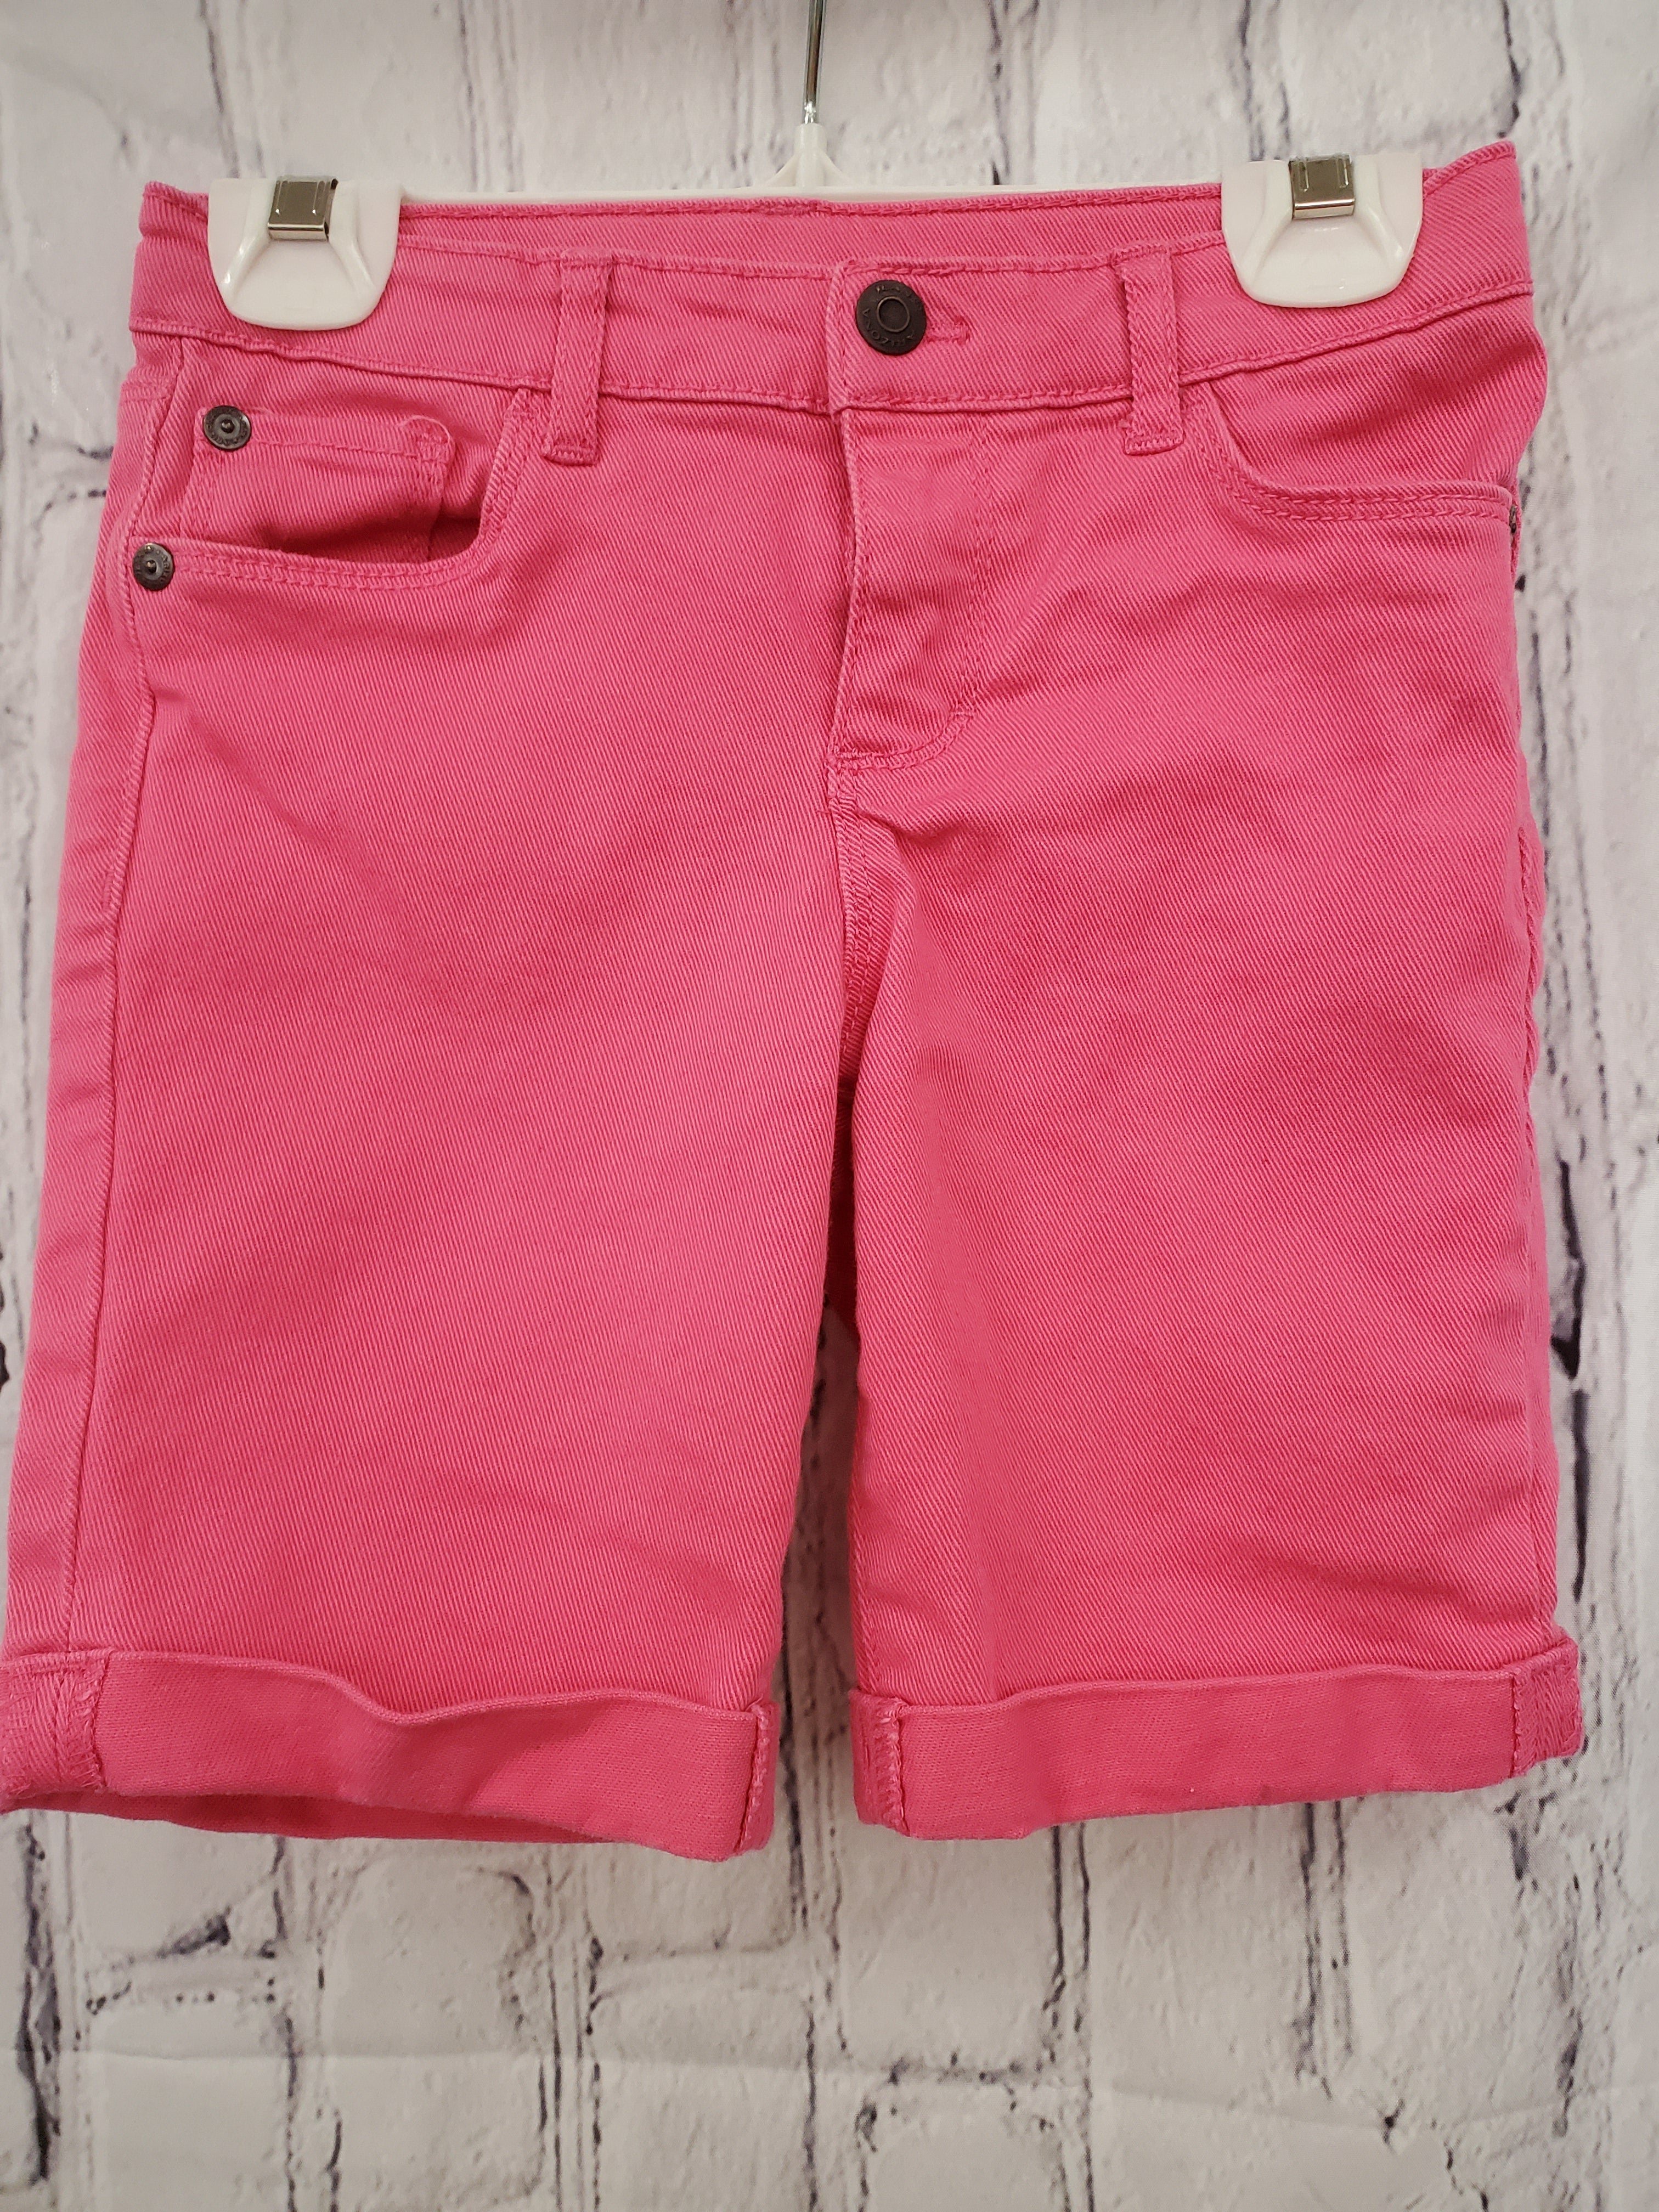 Arizona Jeans girls shorts pink 6x